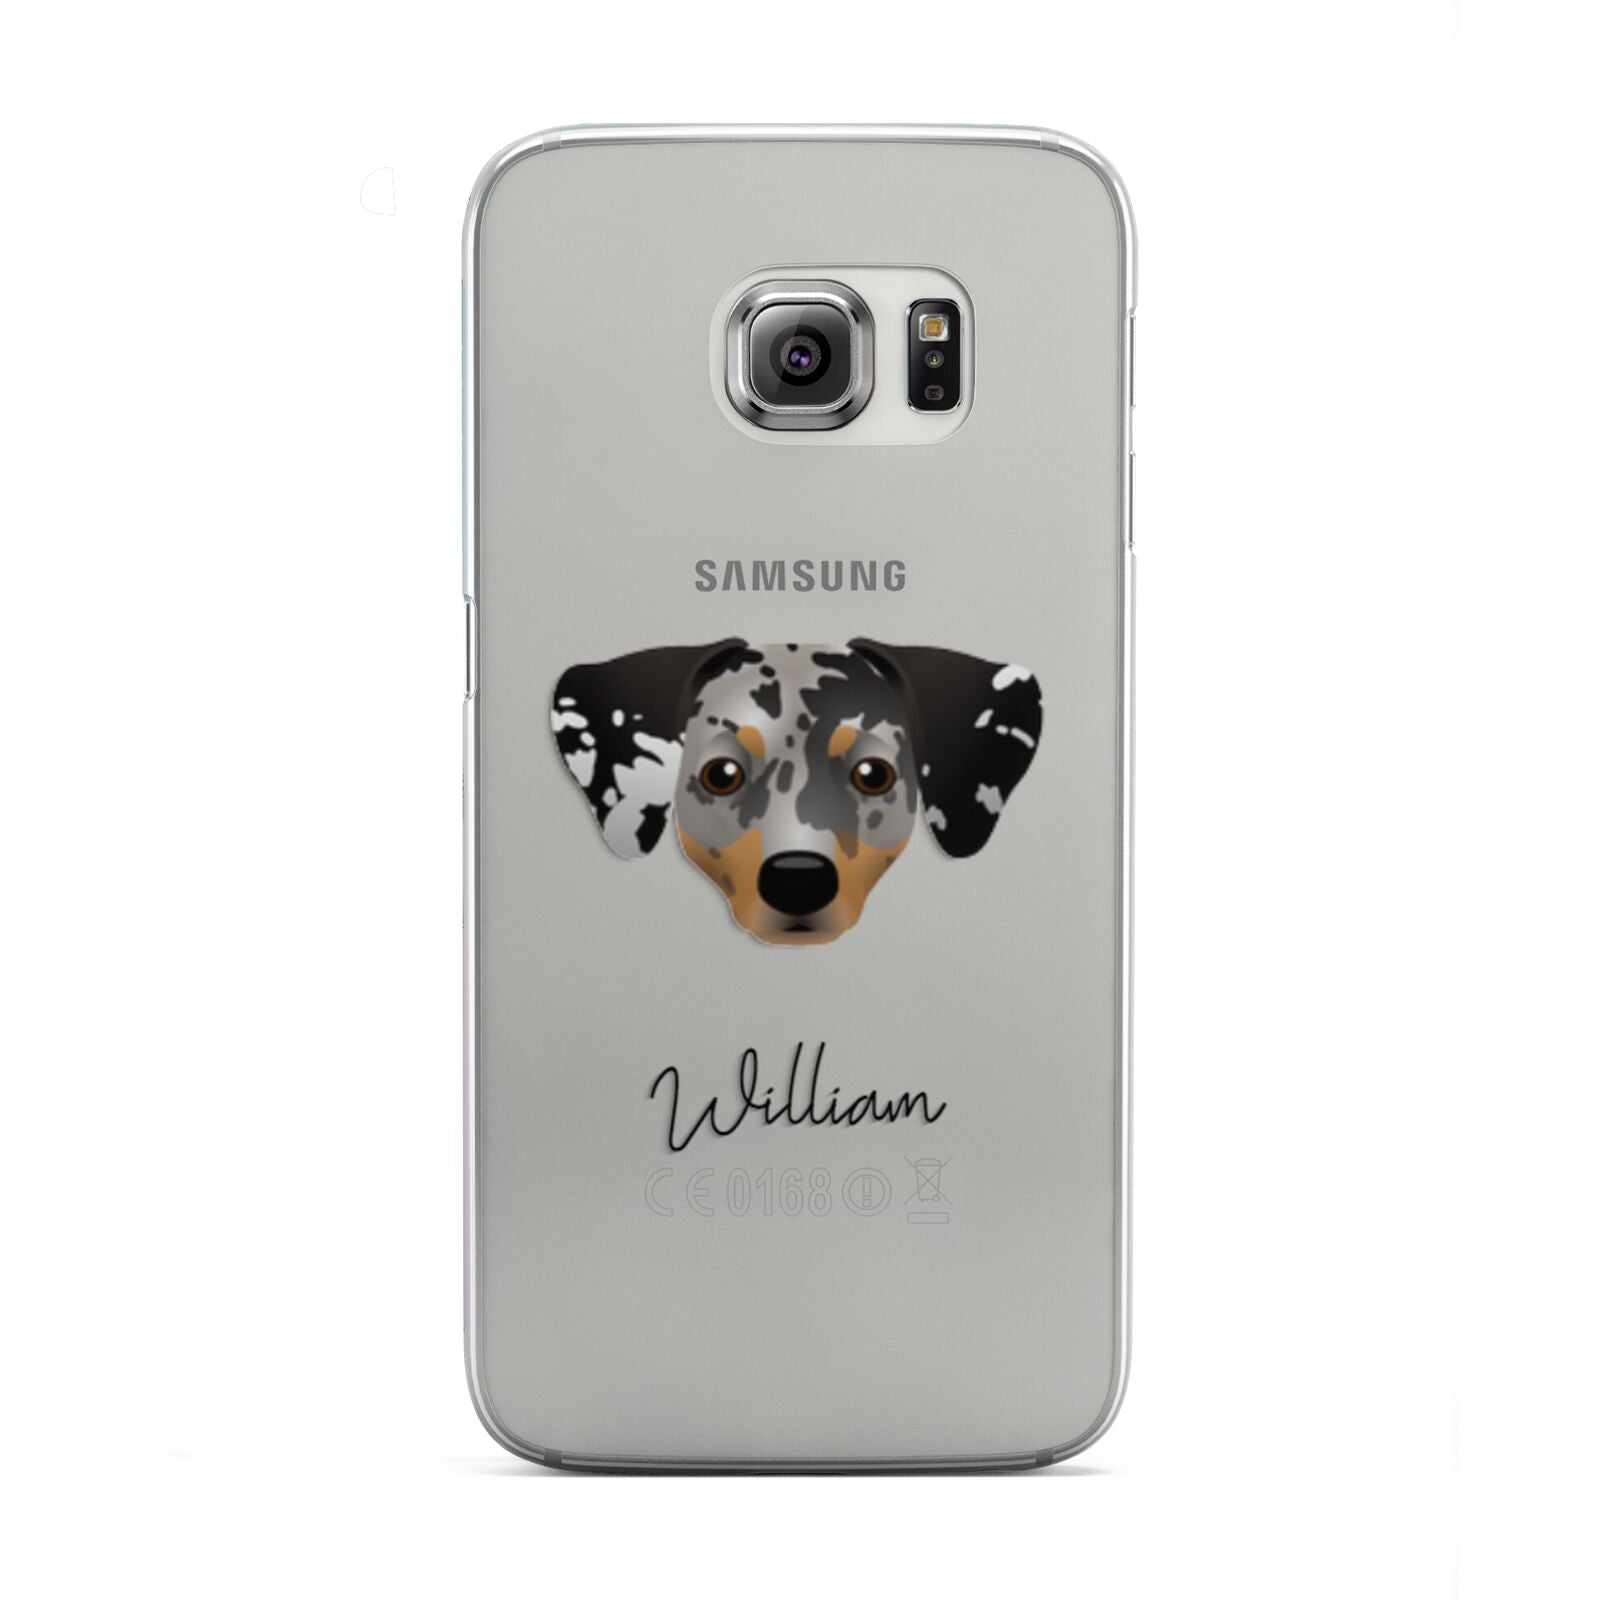 Chiweenie Personalised Samsung Galaxy S6 Edge Case